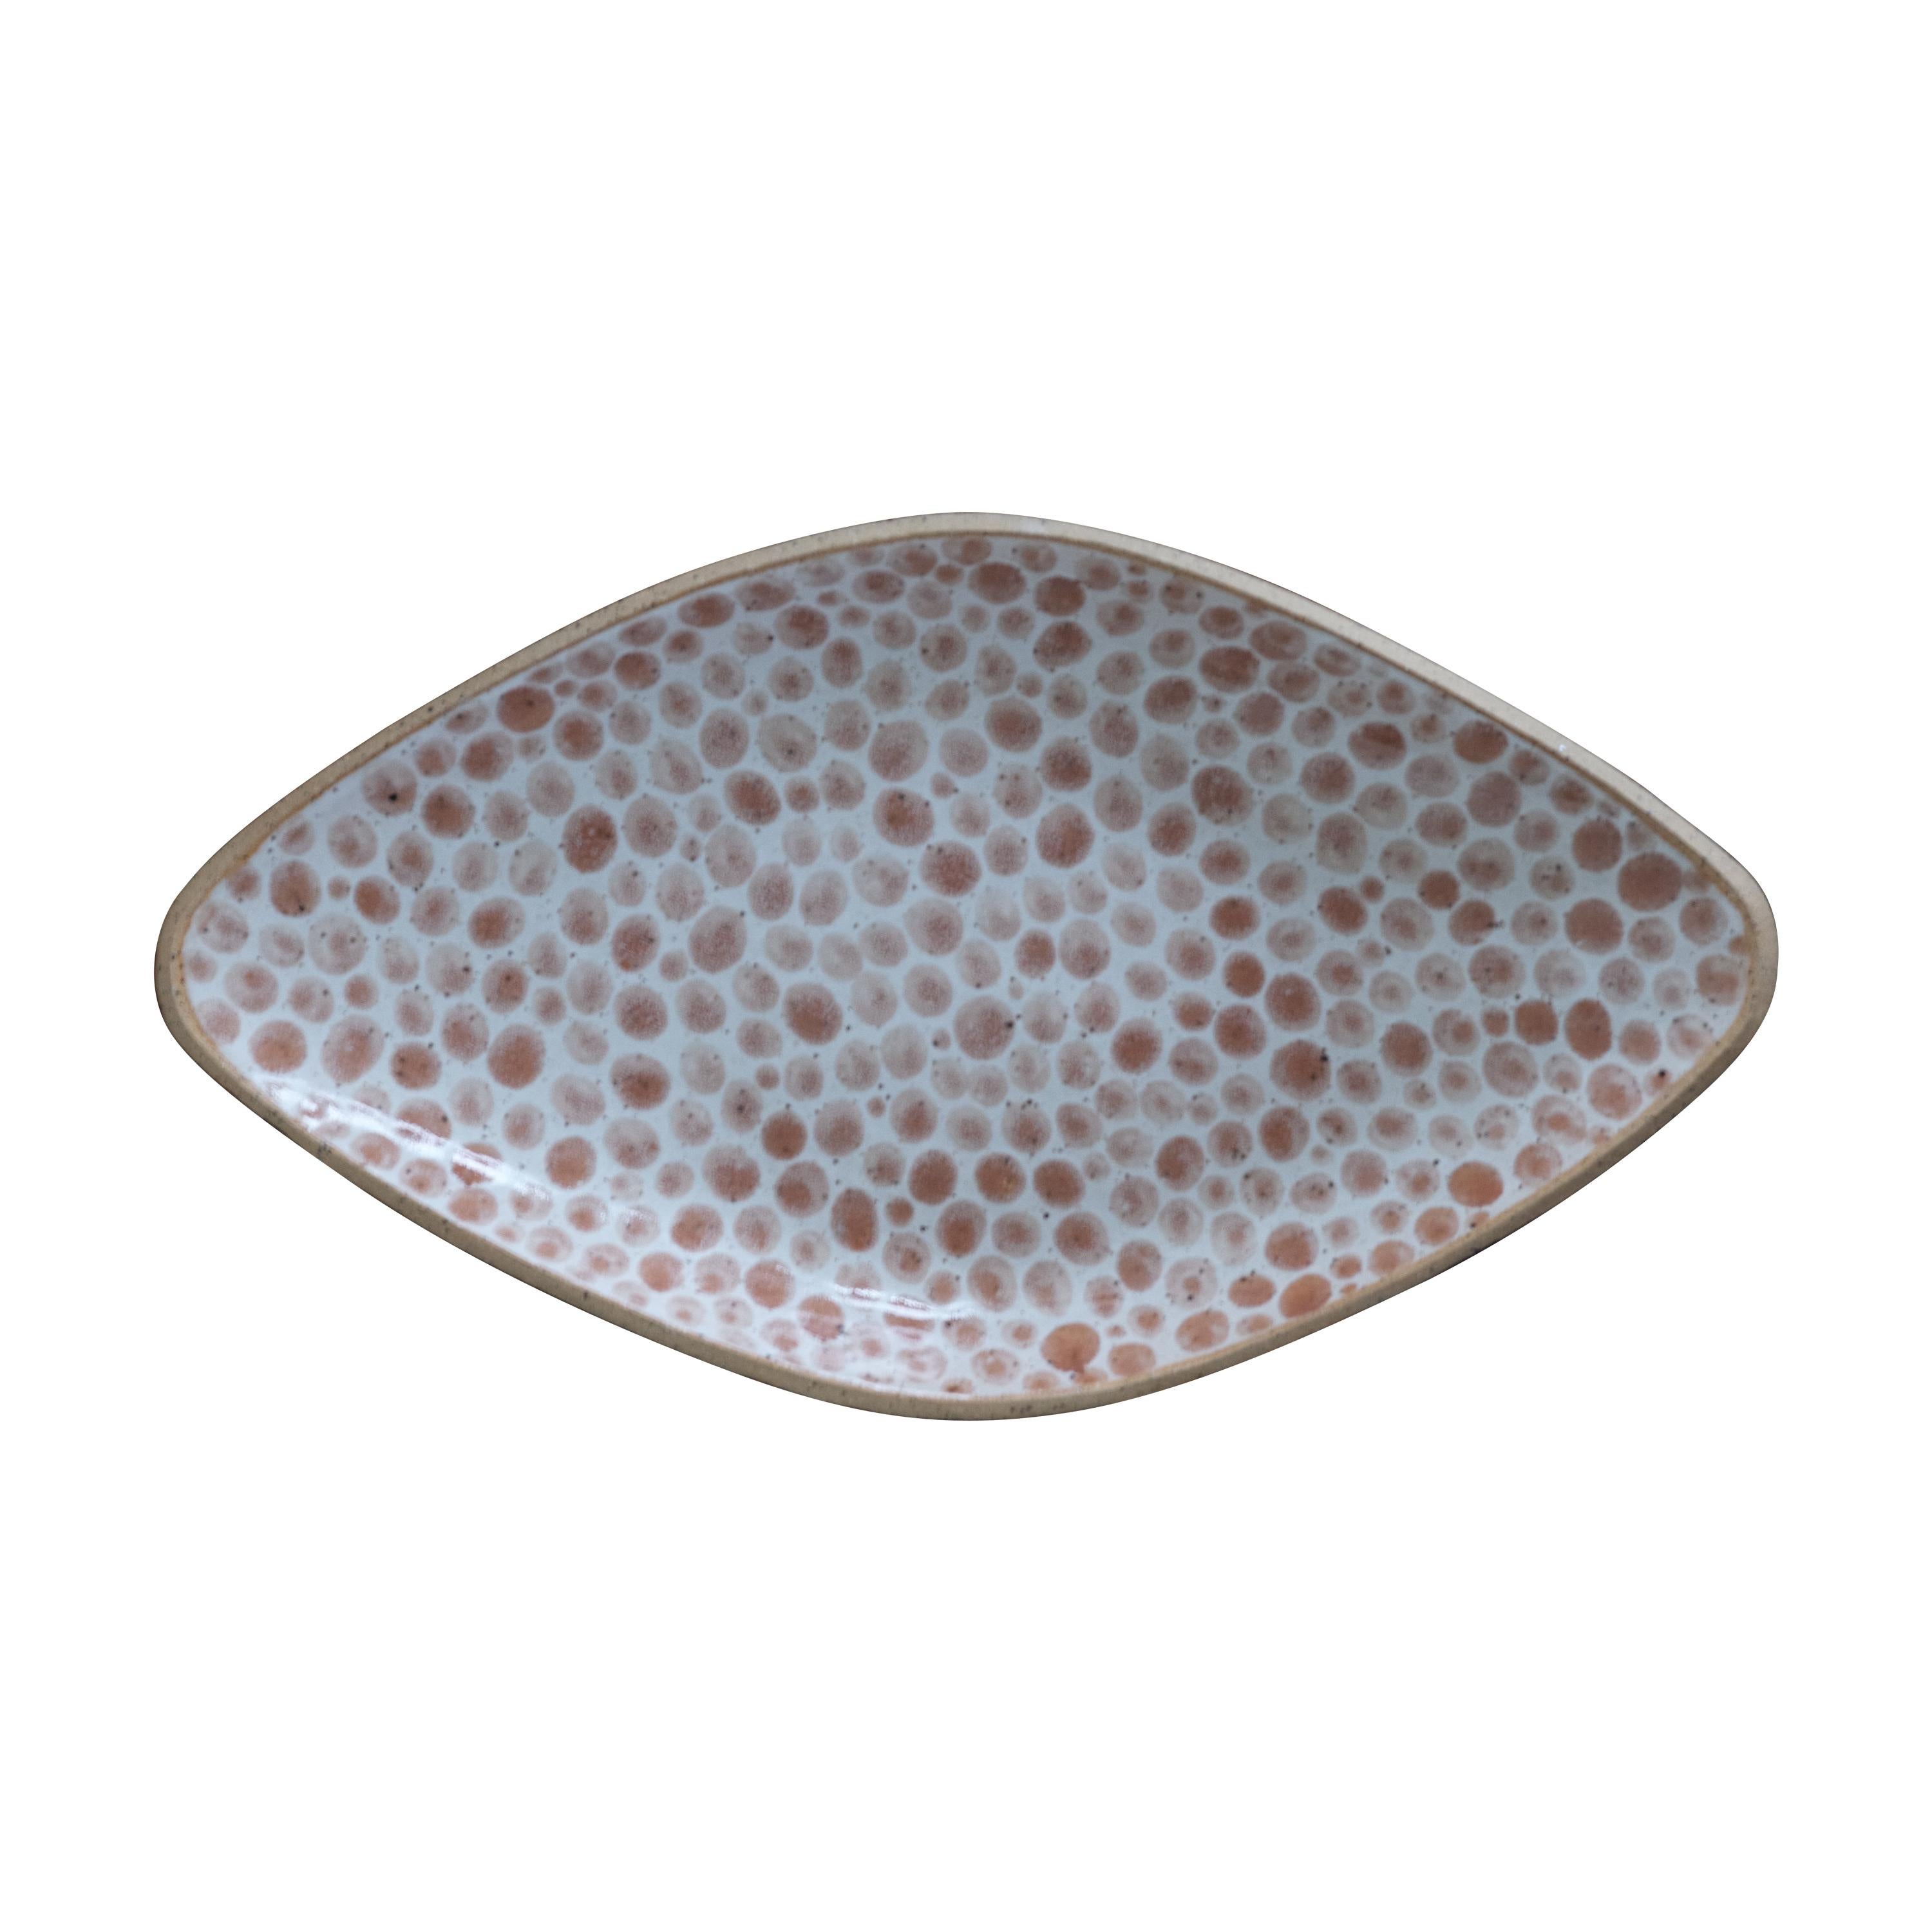 Brown Dots Rhomb Ceramic Handmade Dish by Lana Kova